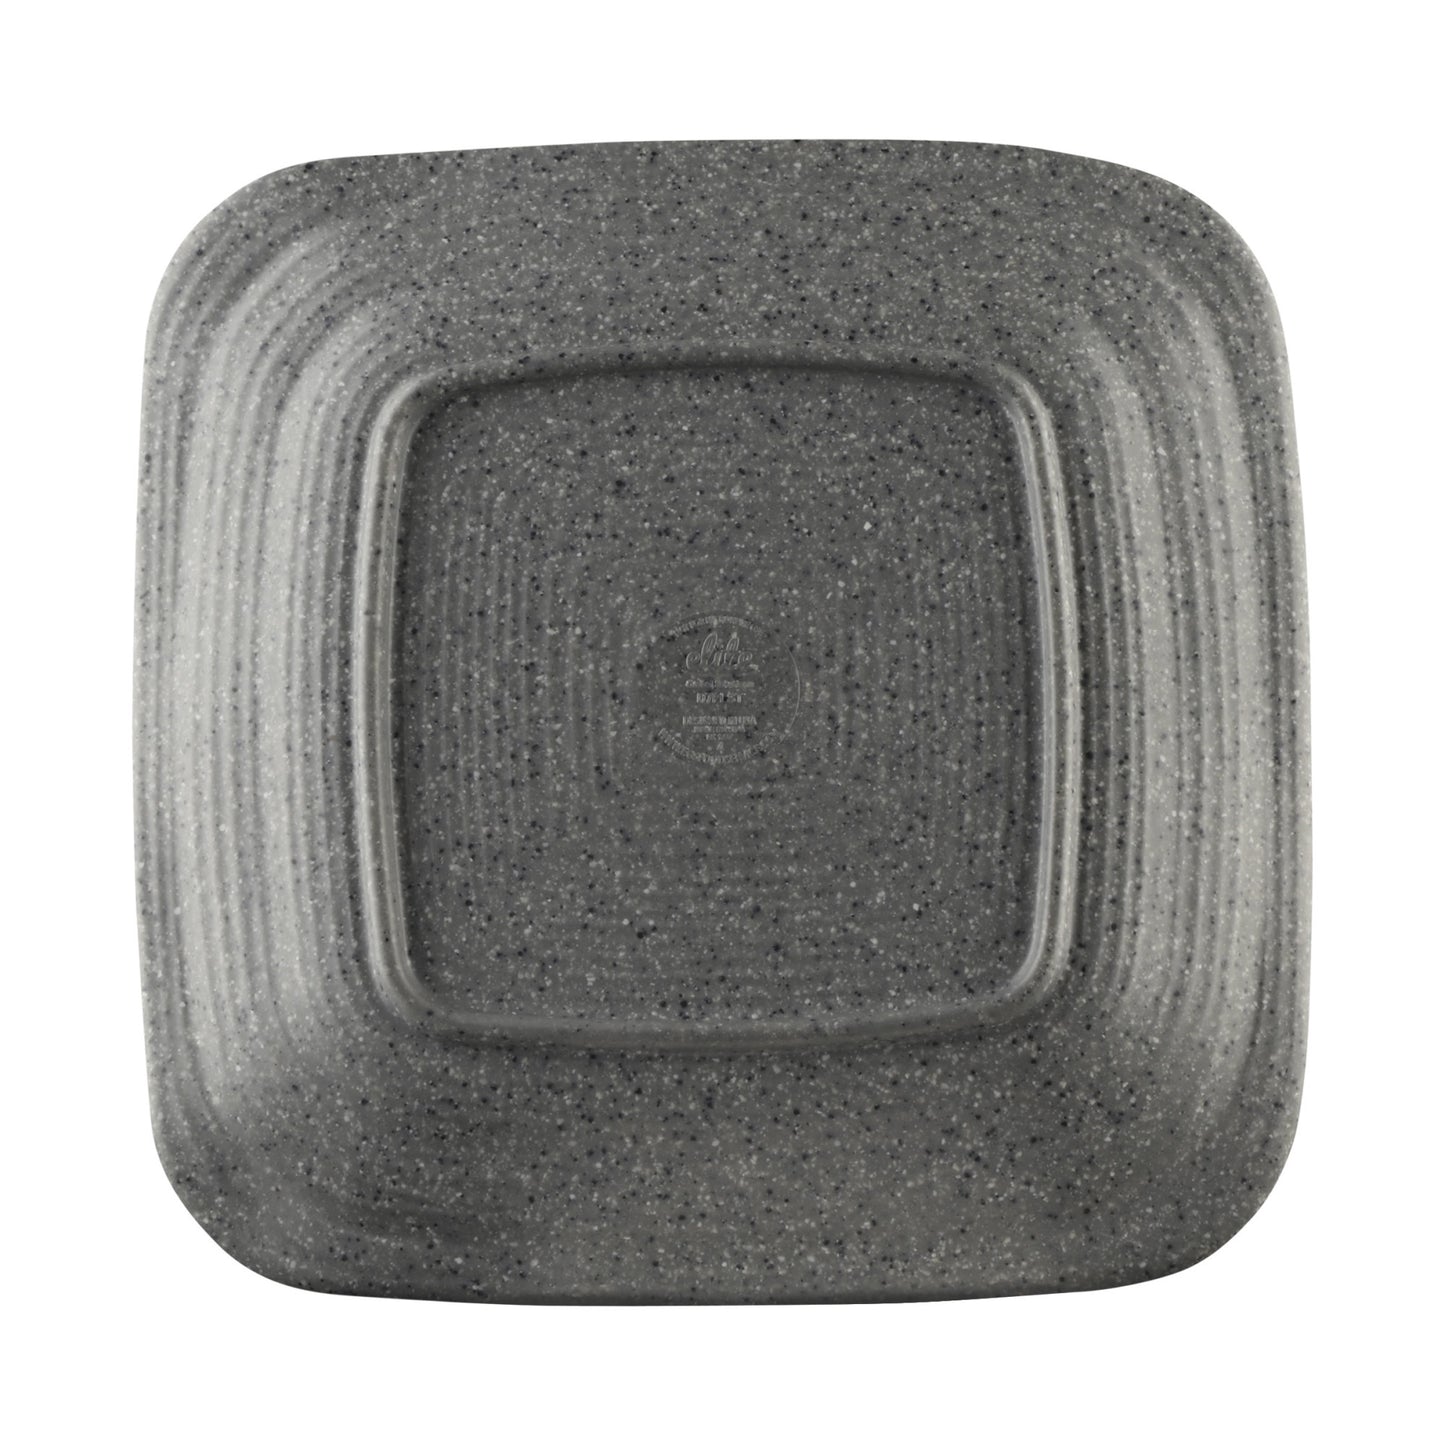 Melamine Irregular Square Plate - Granite Stone Design